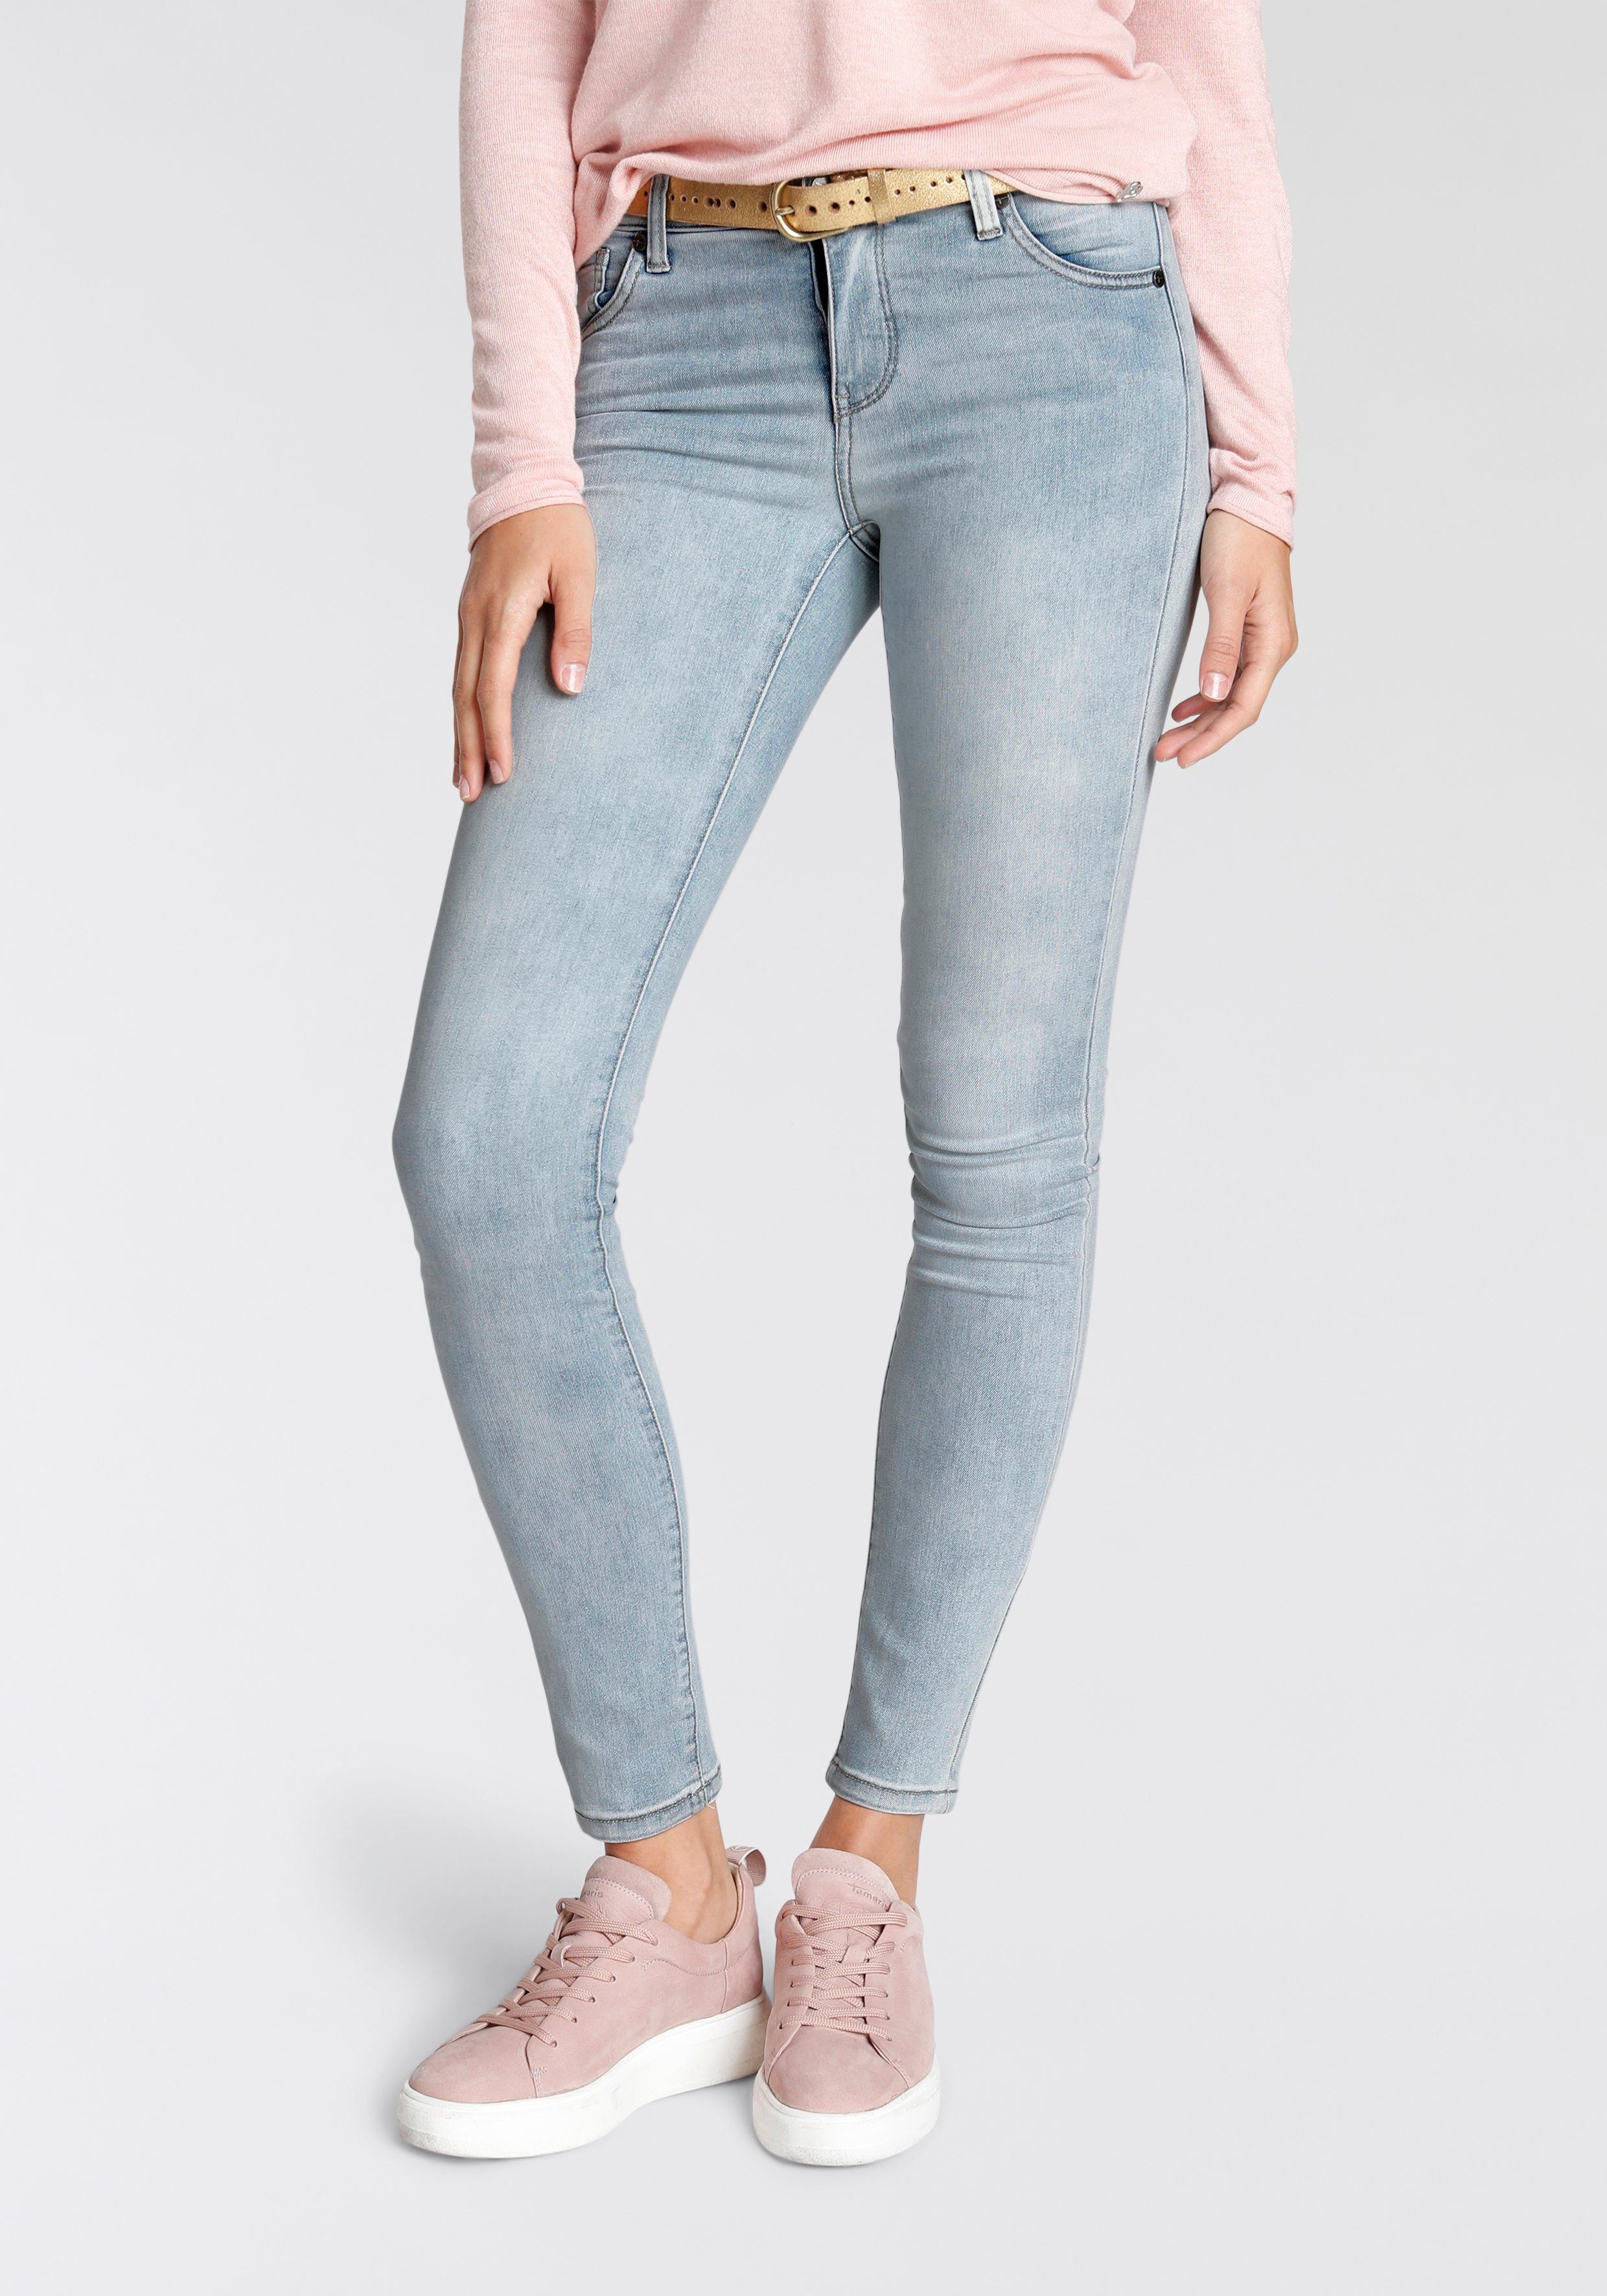 OTTO Damen Kleidung Hosen & Jeans Jeans Skinny Jeans Skinny-fit-Jeans im klassichen 5-Pocket Design 